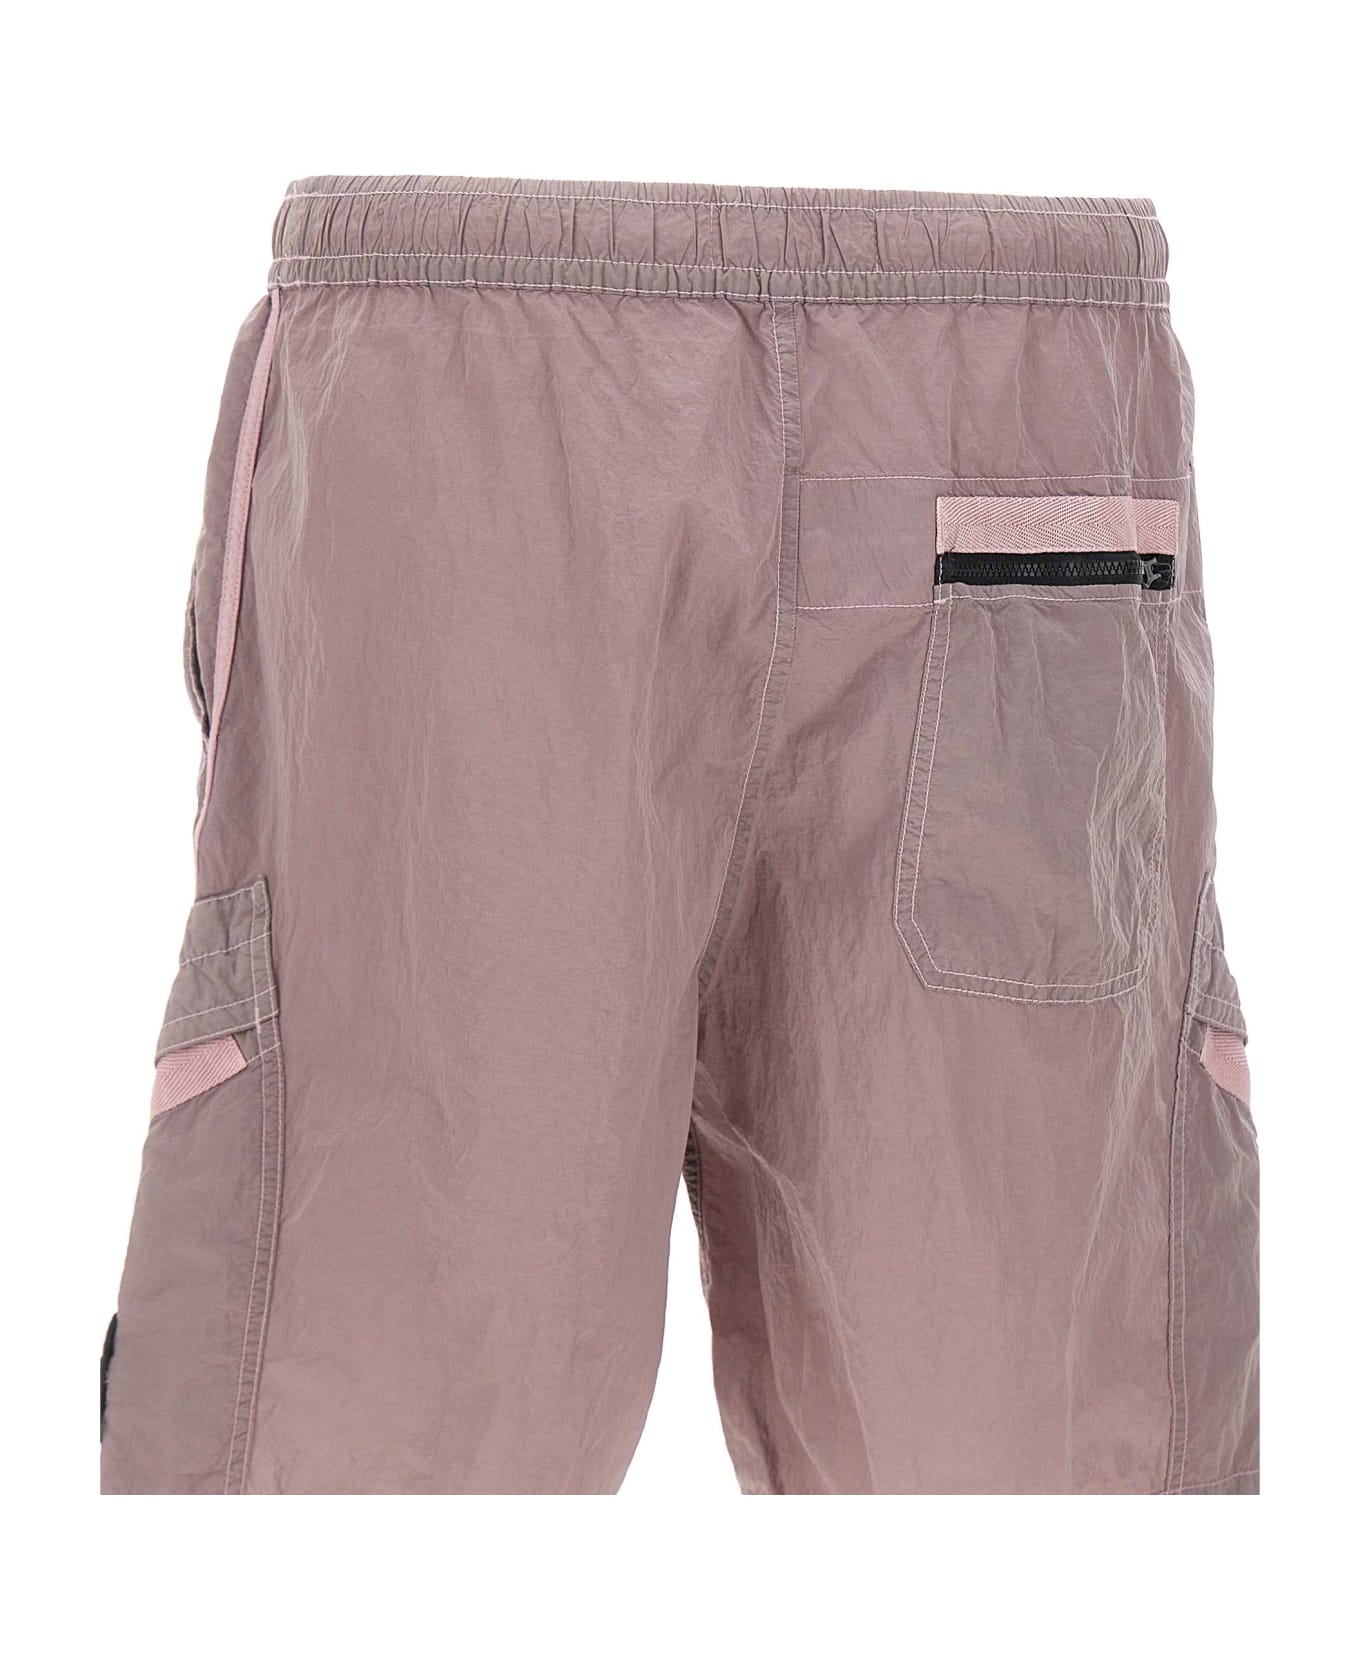 Stone Island Iridescent Nylon Shorts - PINK